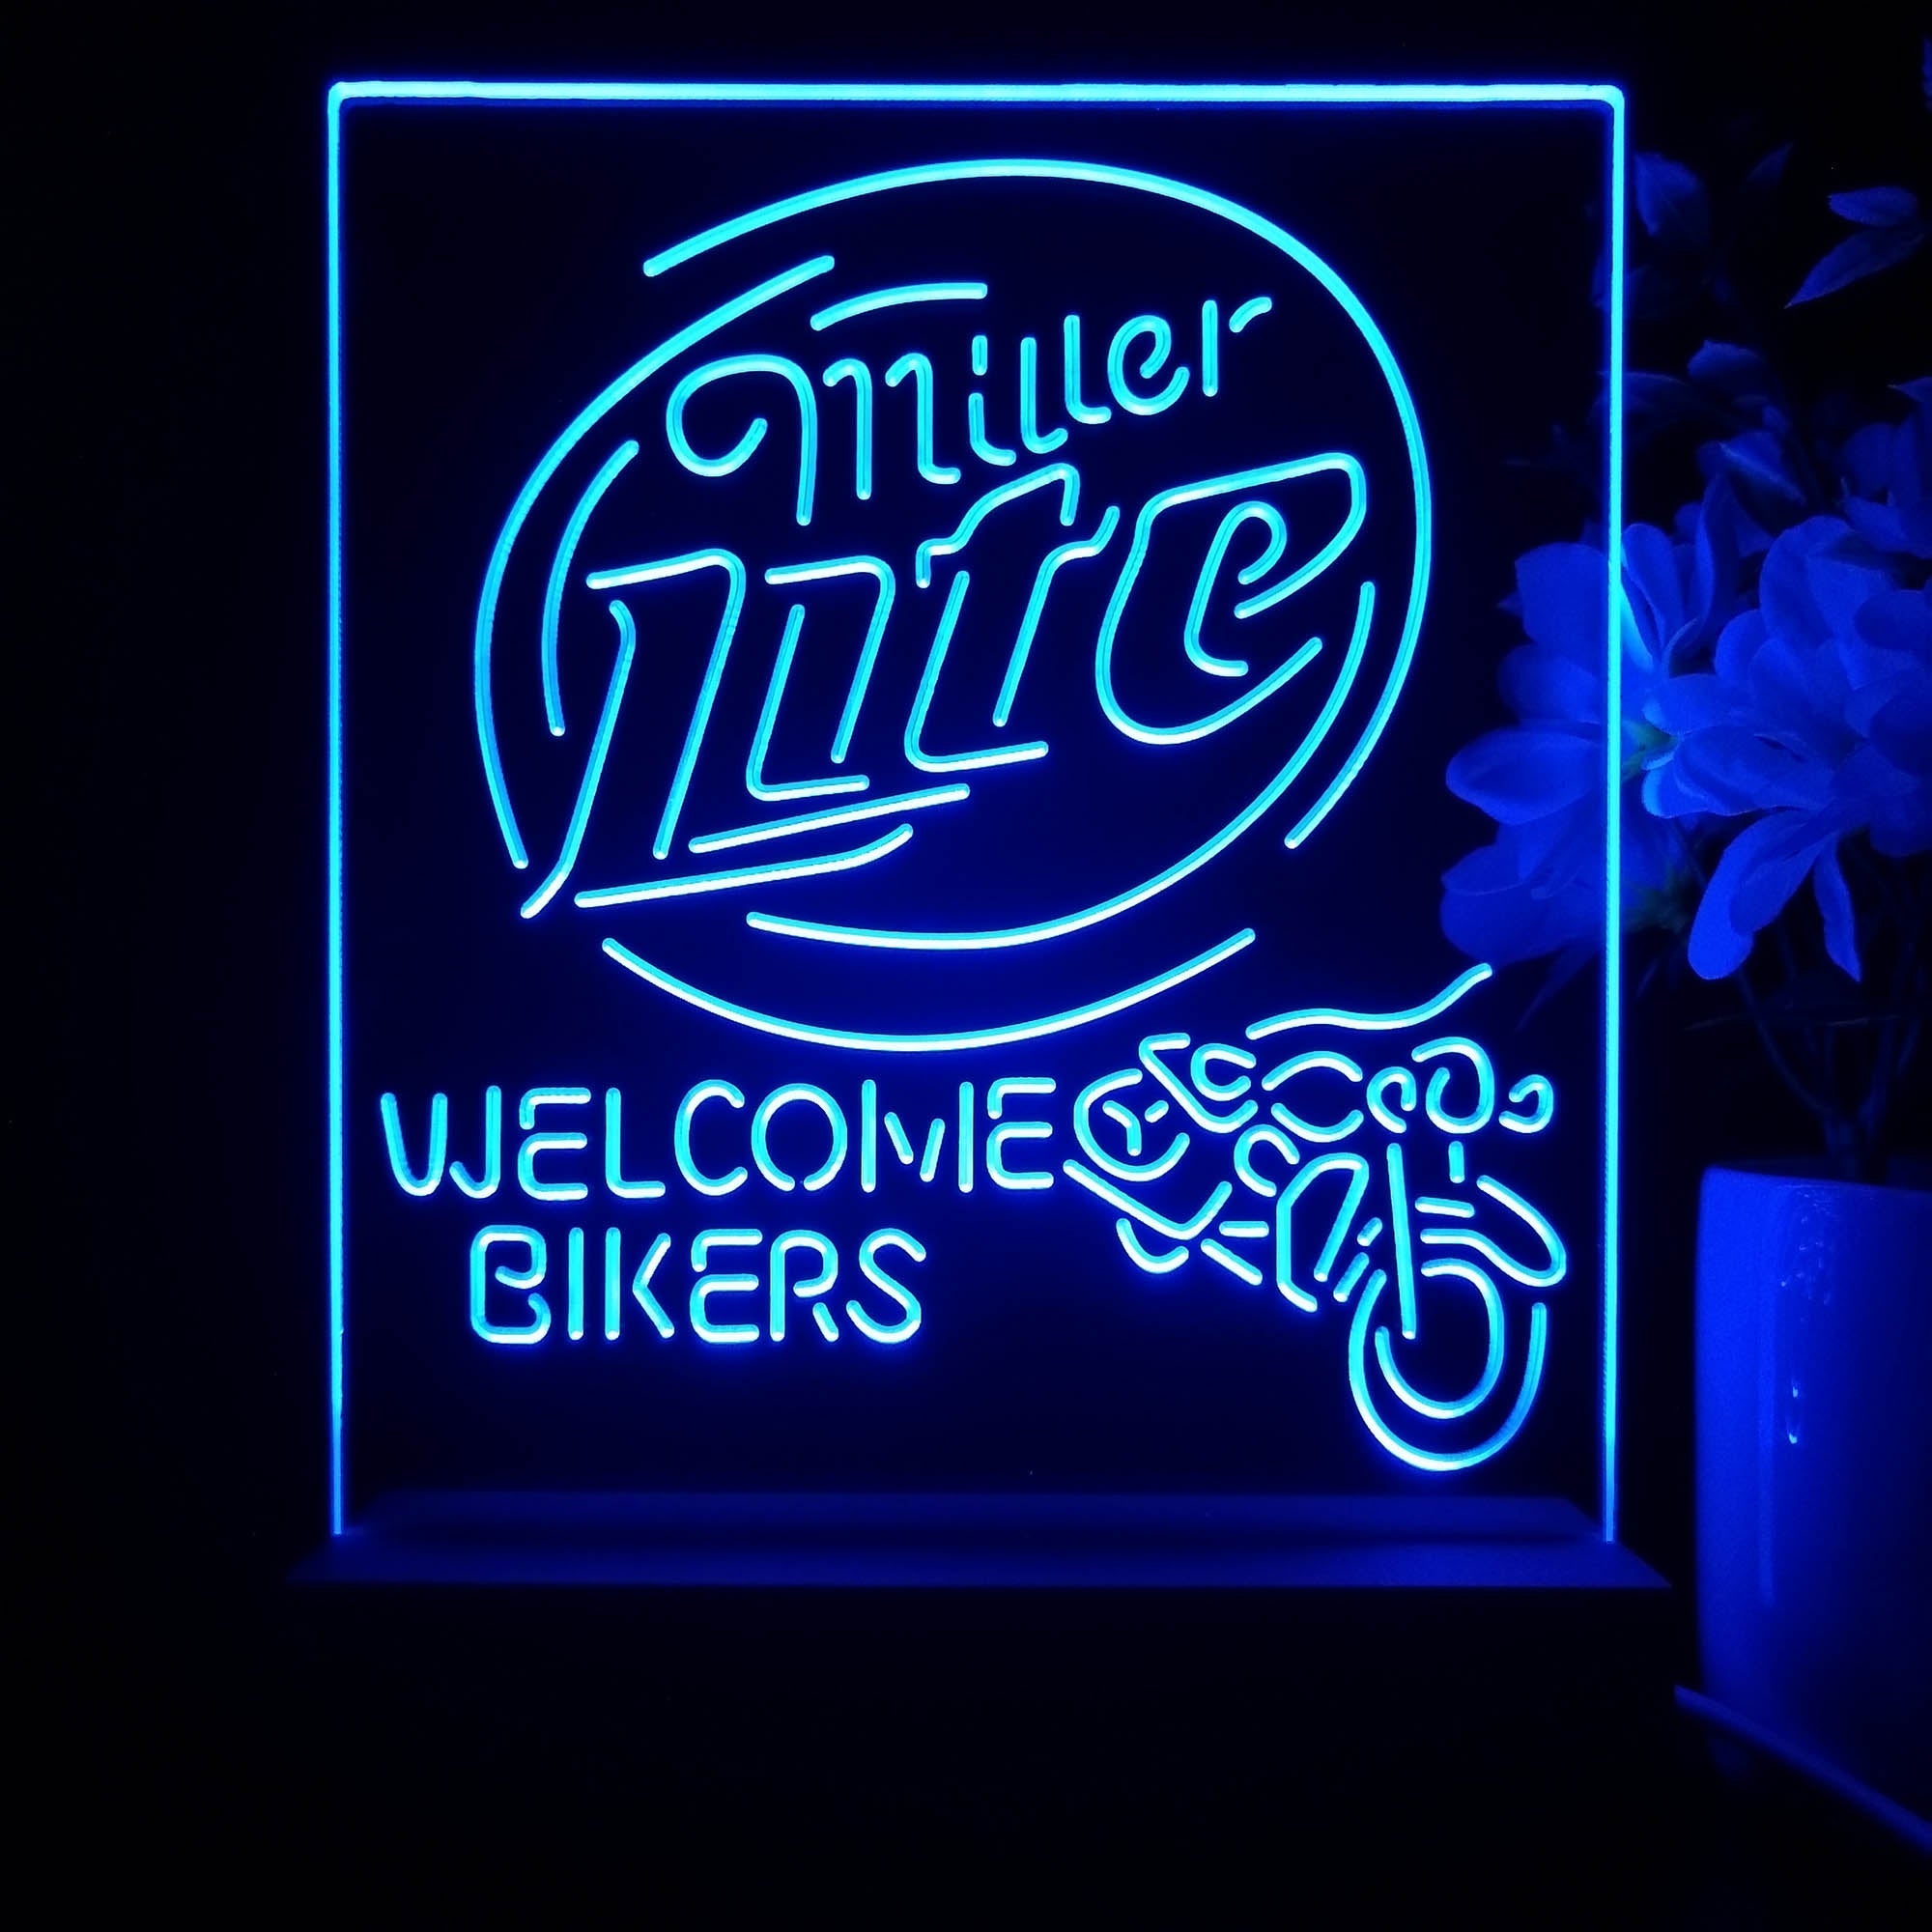 Miller Lite Motorcycle Bikers Night Light Neon Pub Bar Lamp